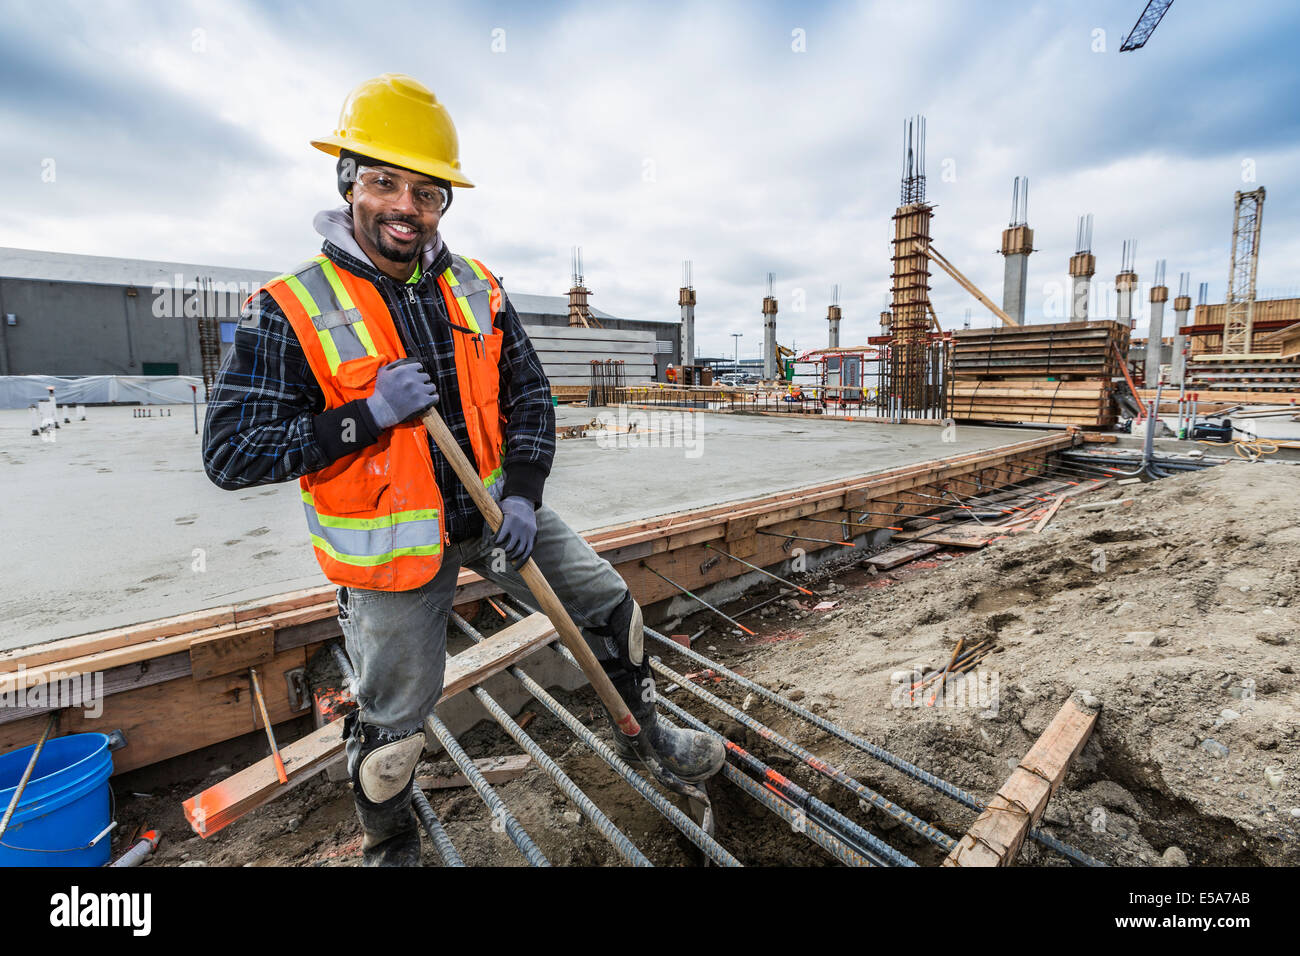 Black worker smiling at construction site Banque D'Images